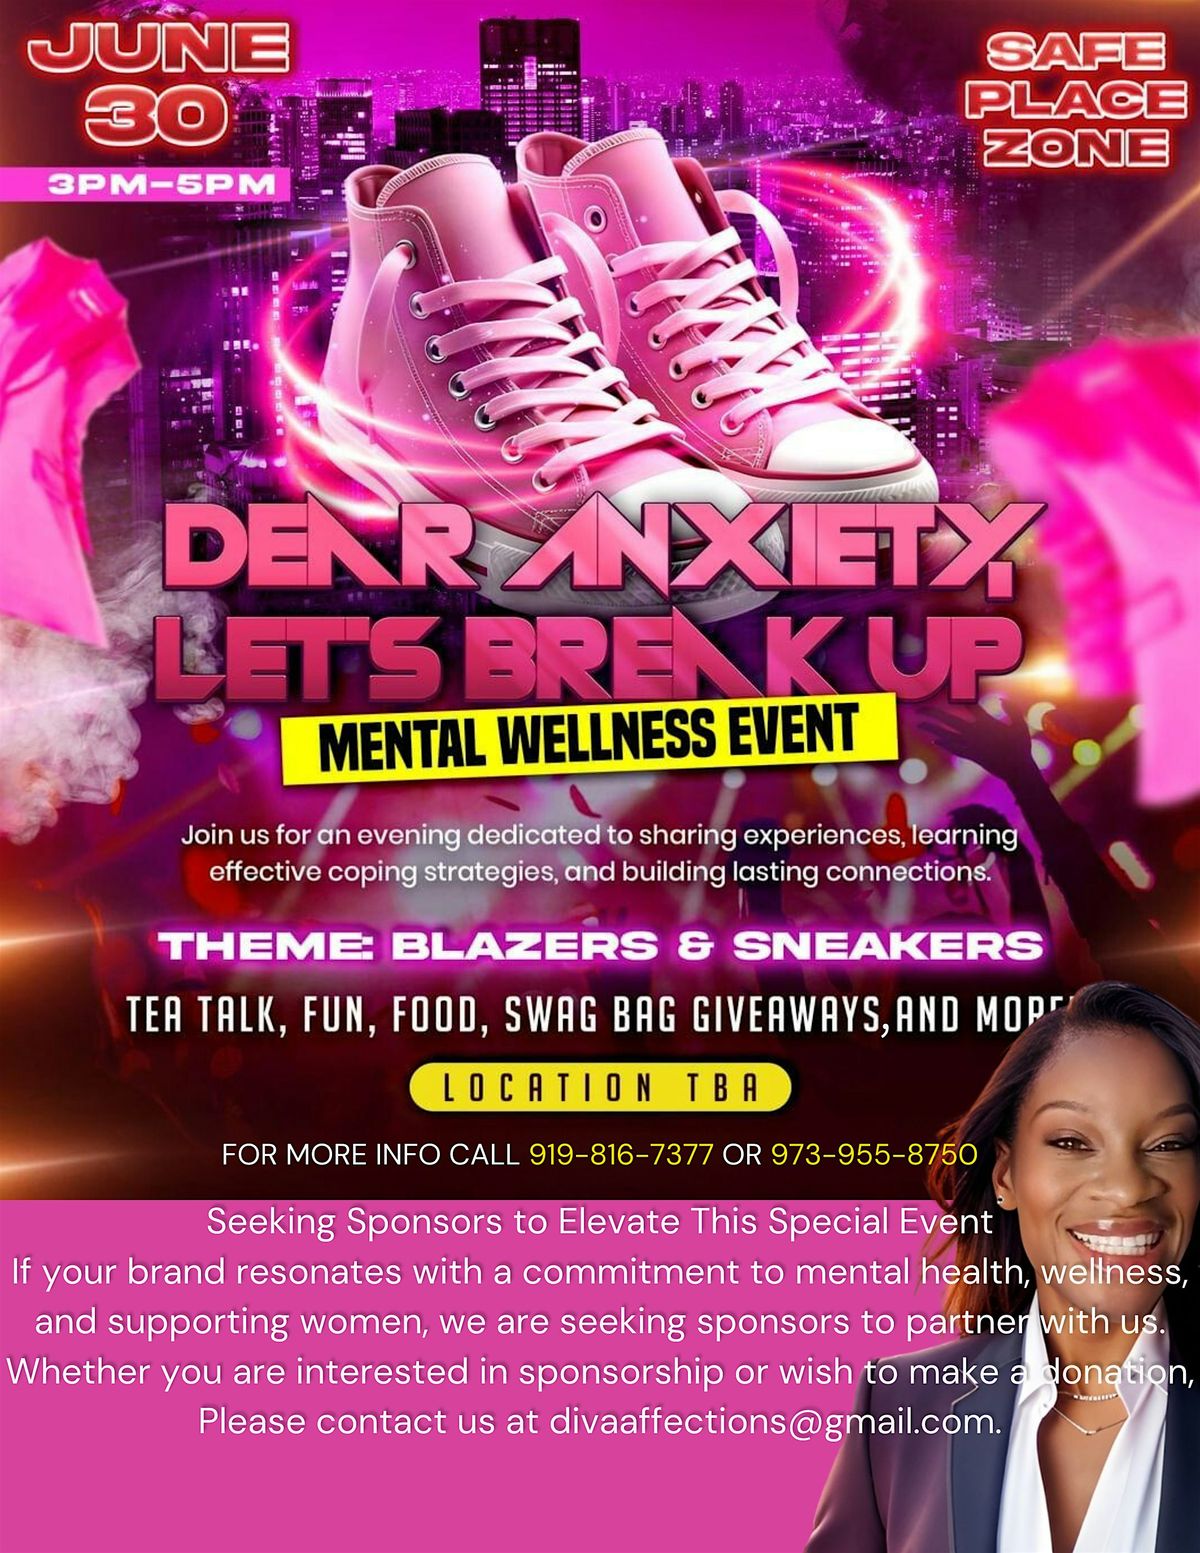 Dear Anxiety, Let\u2019s Break Up! Mental Wellness Event